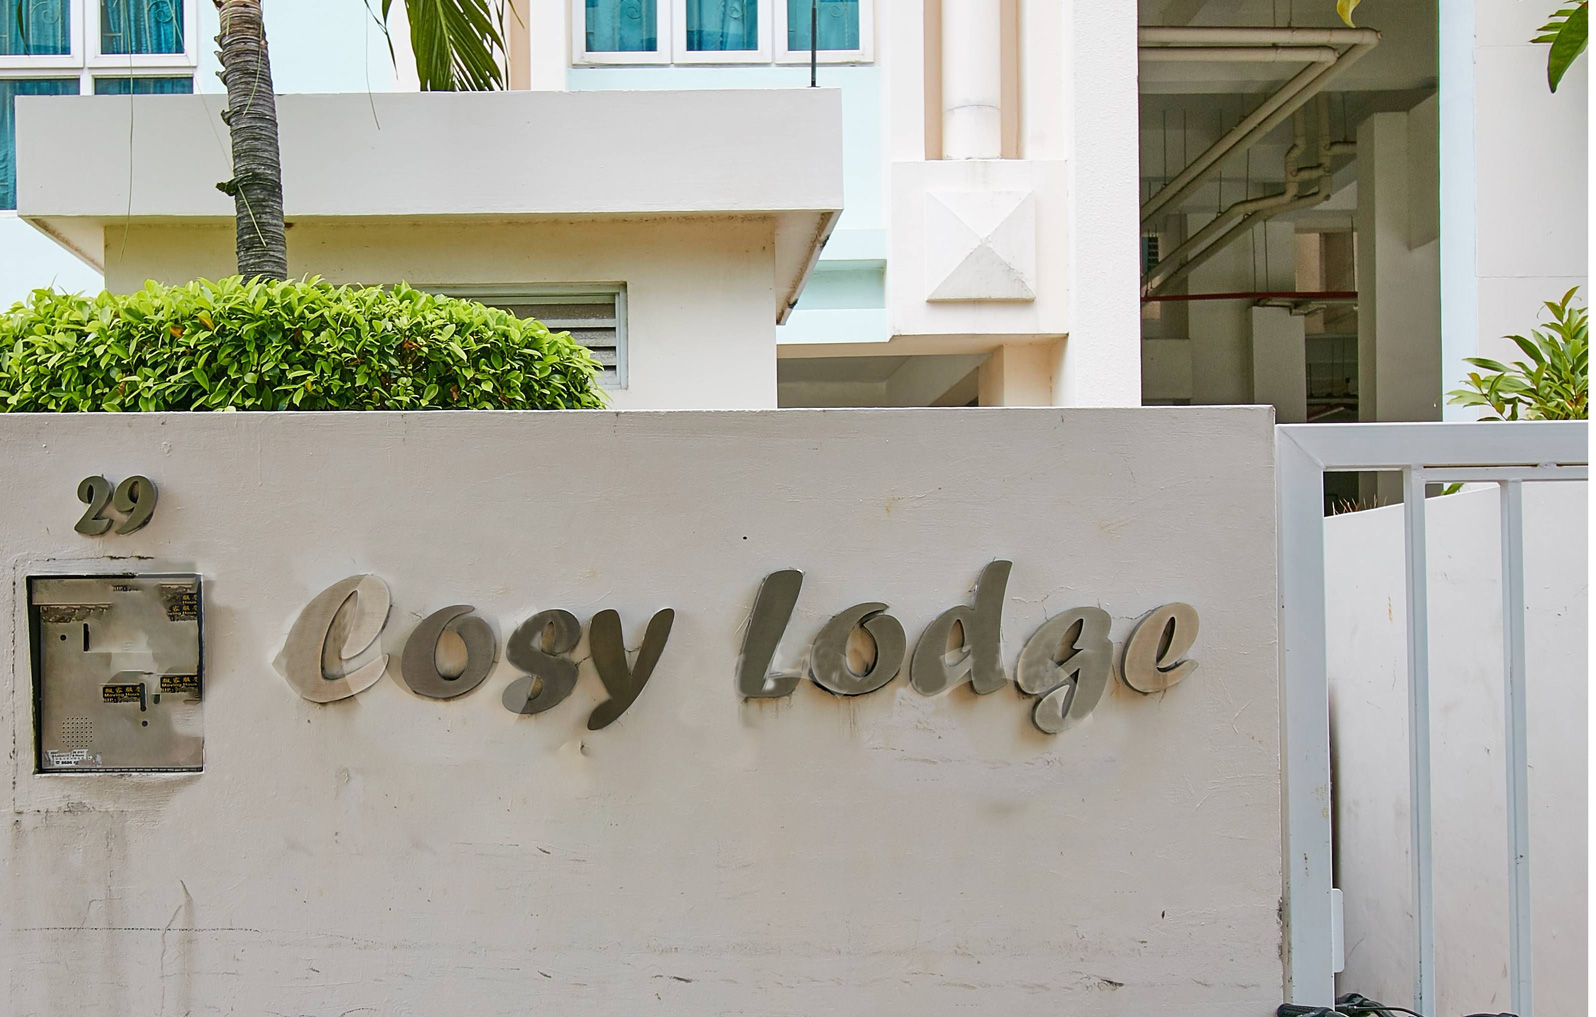 Cosy Lodge floor plan